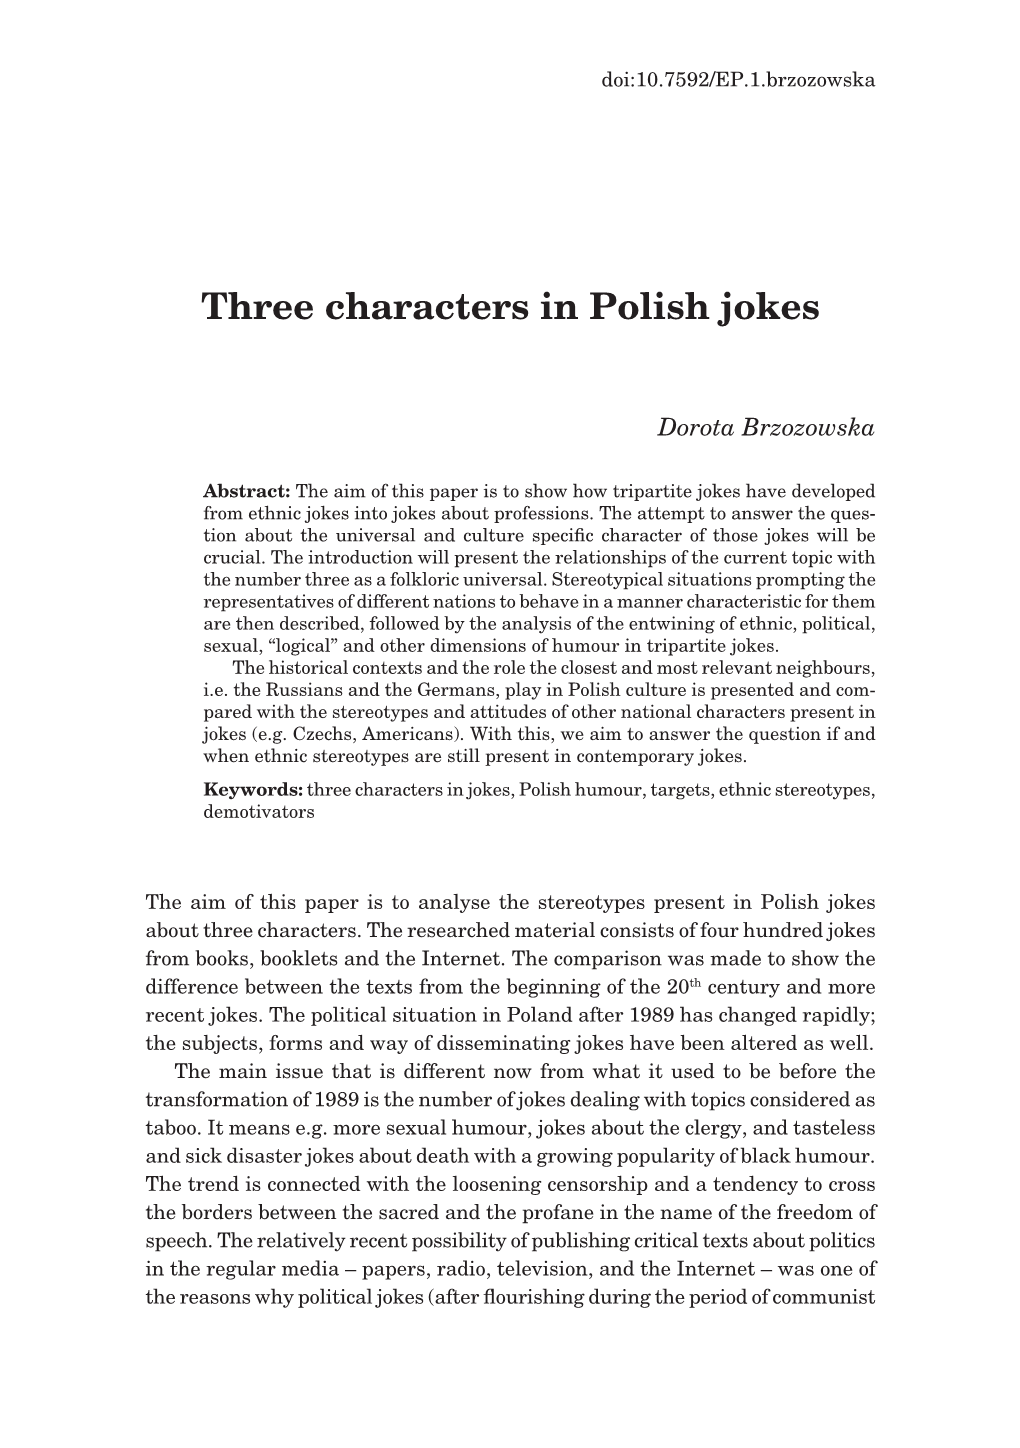 Three Characters in Polish Jokes